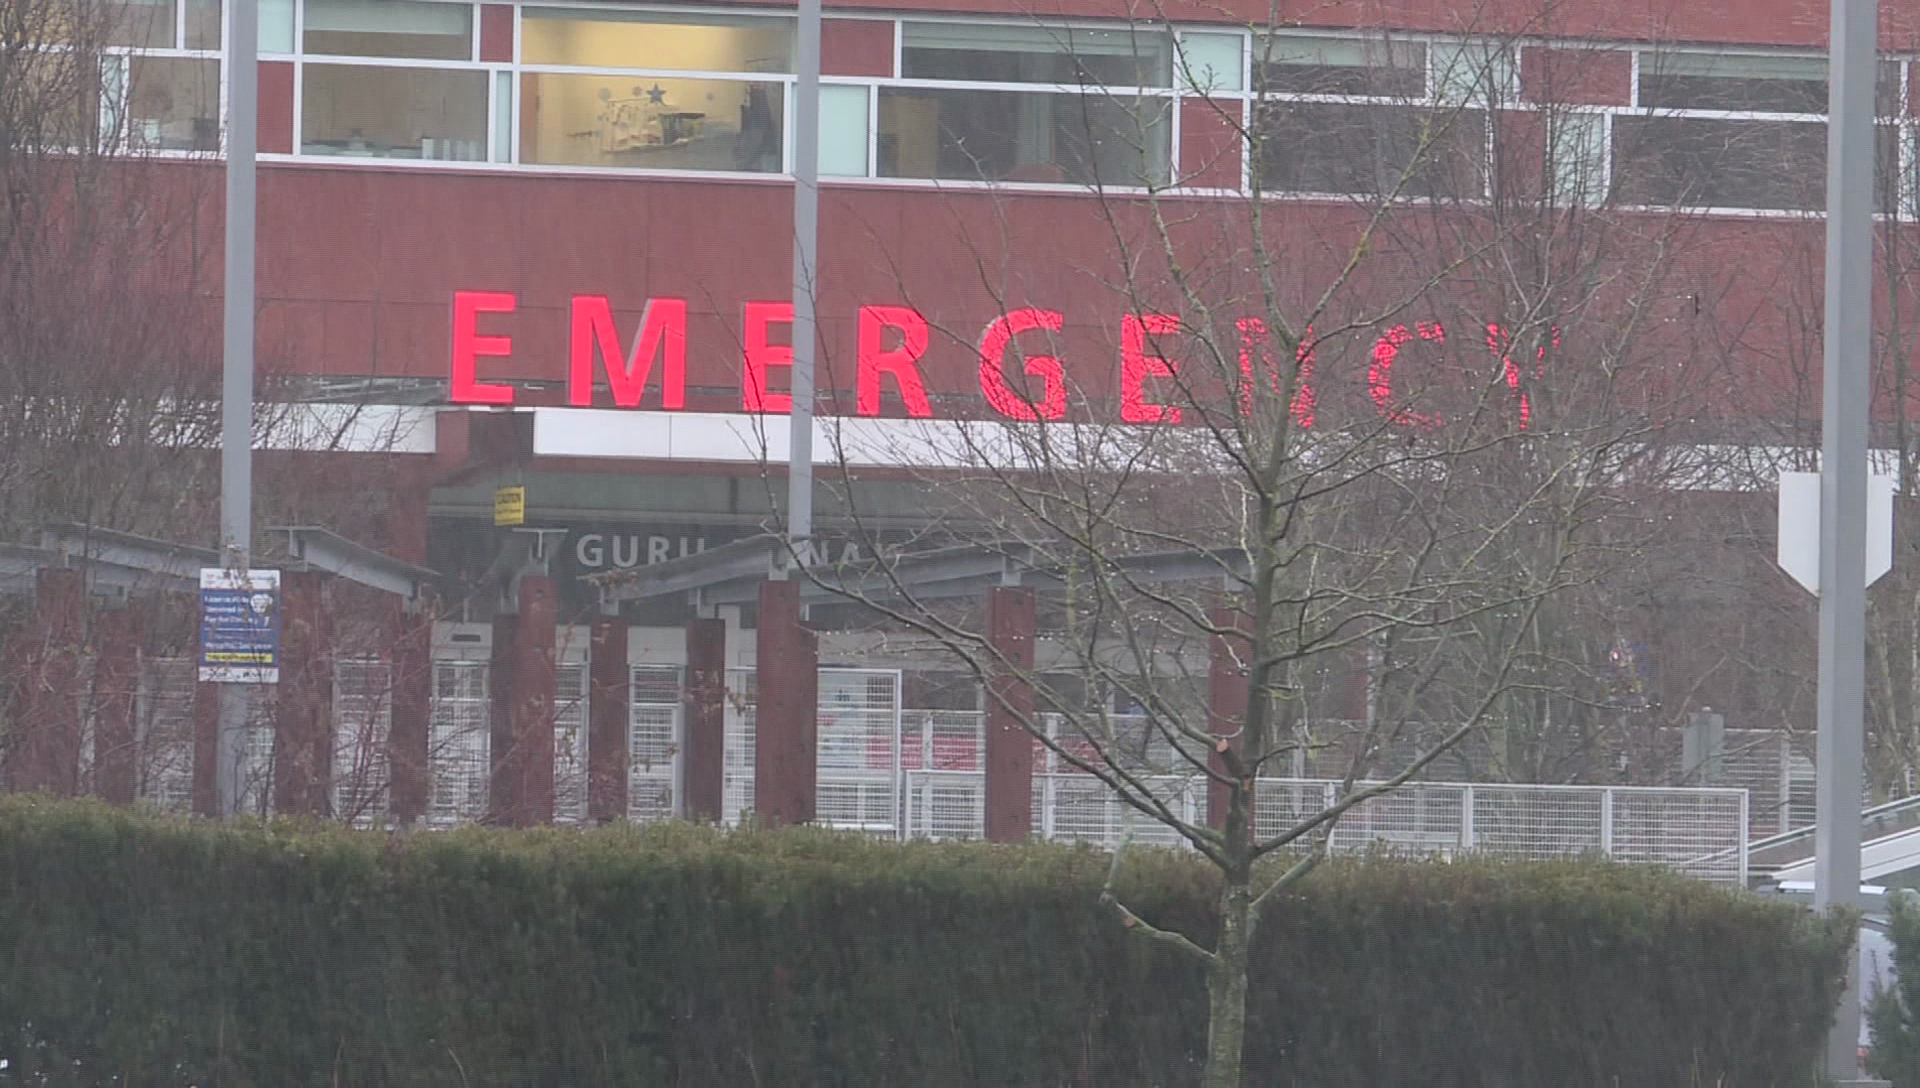 Aid needed amid Surrey Memorial Hospital crisis: Cross-hospital plea